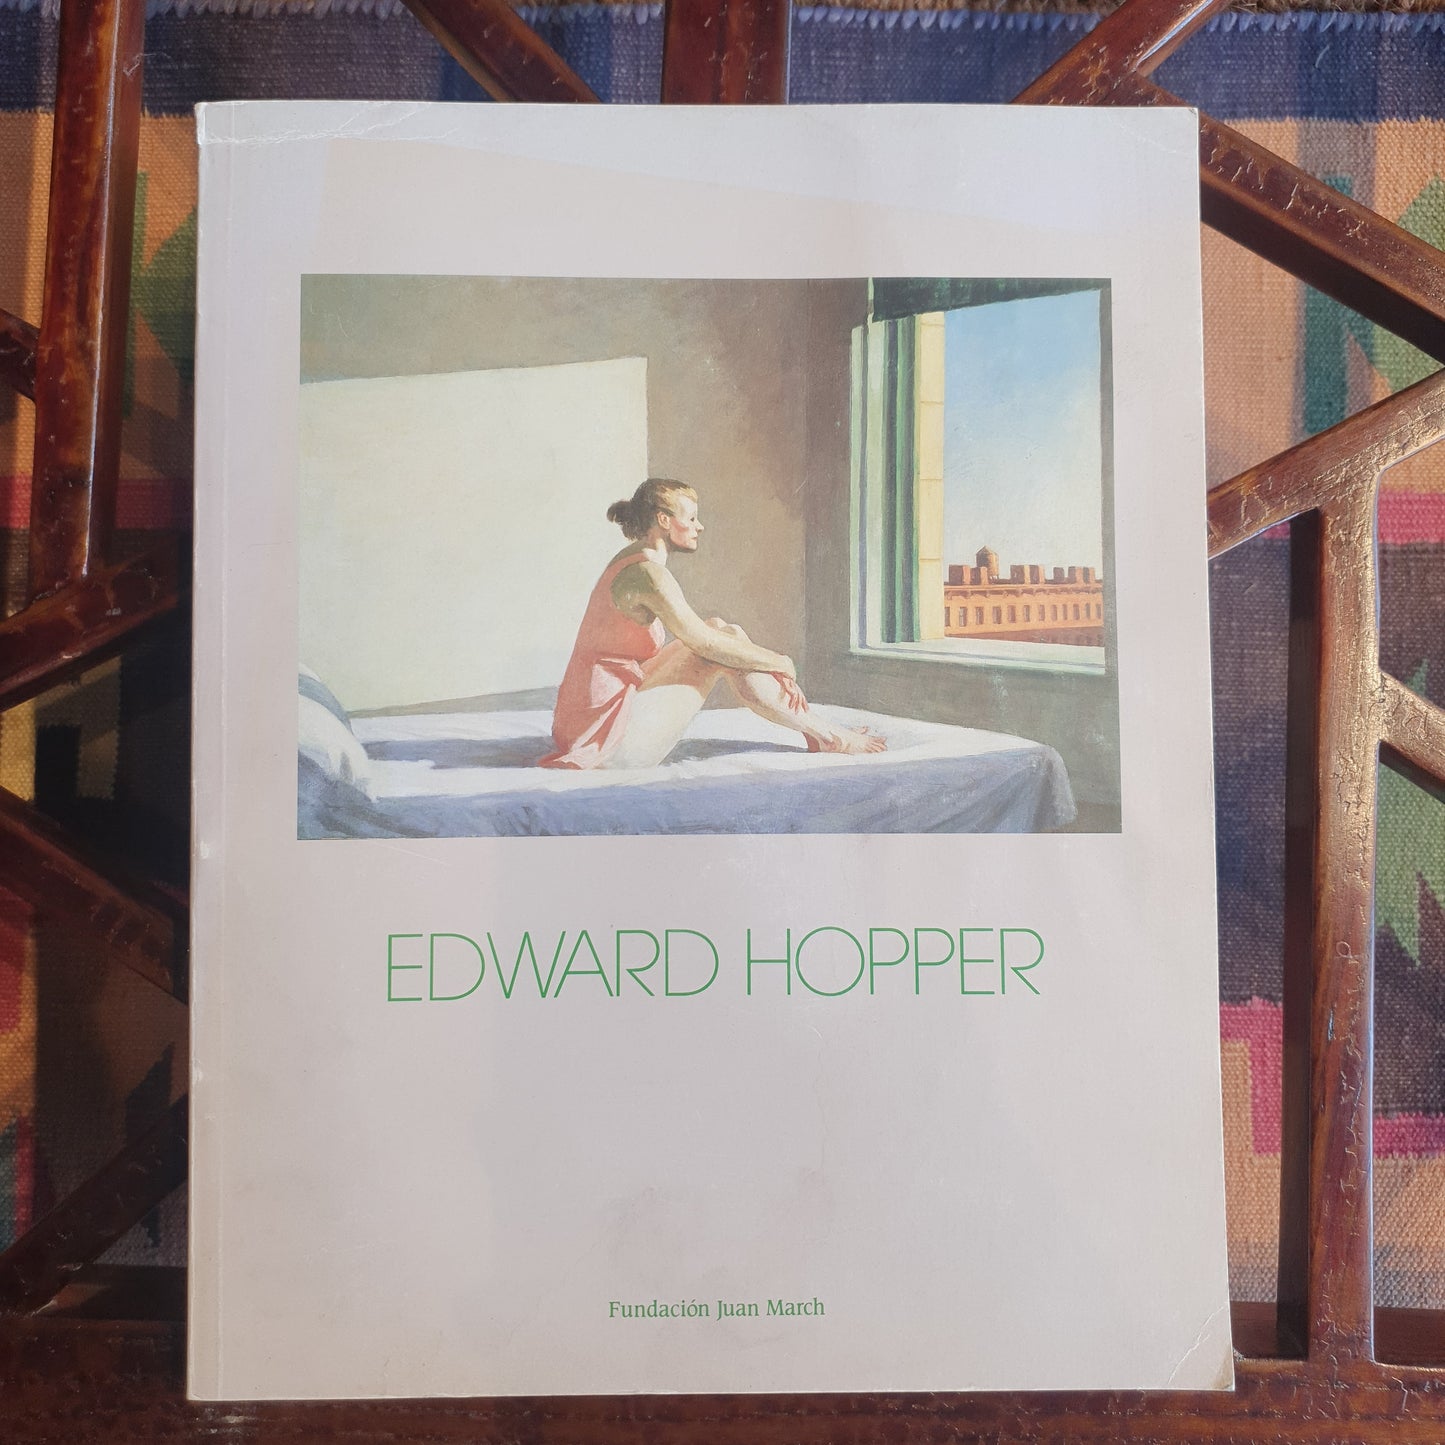 EDWARD HOPPER. FUNDACIÓN JUAN MARCH, MADRID 1989